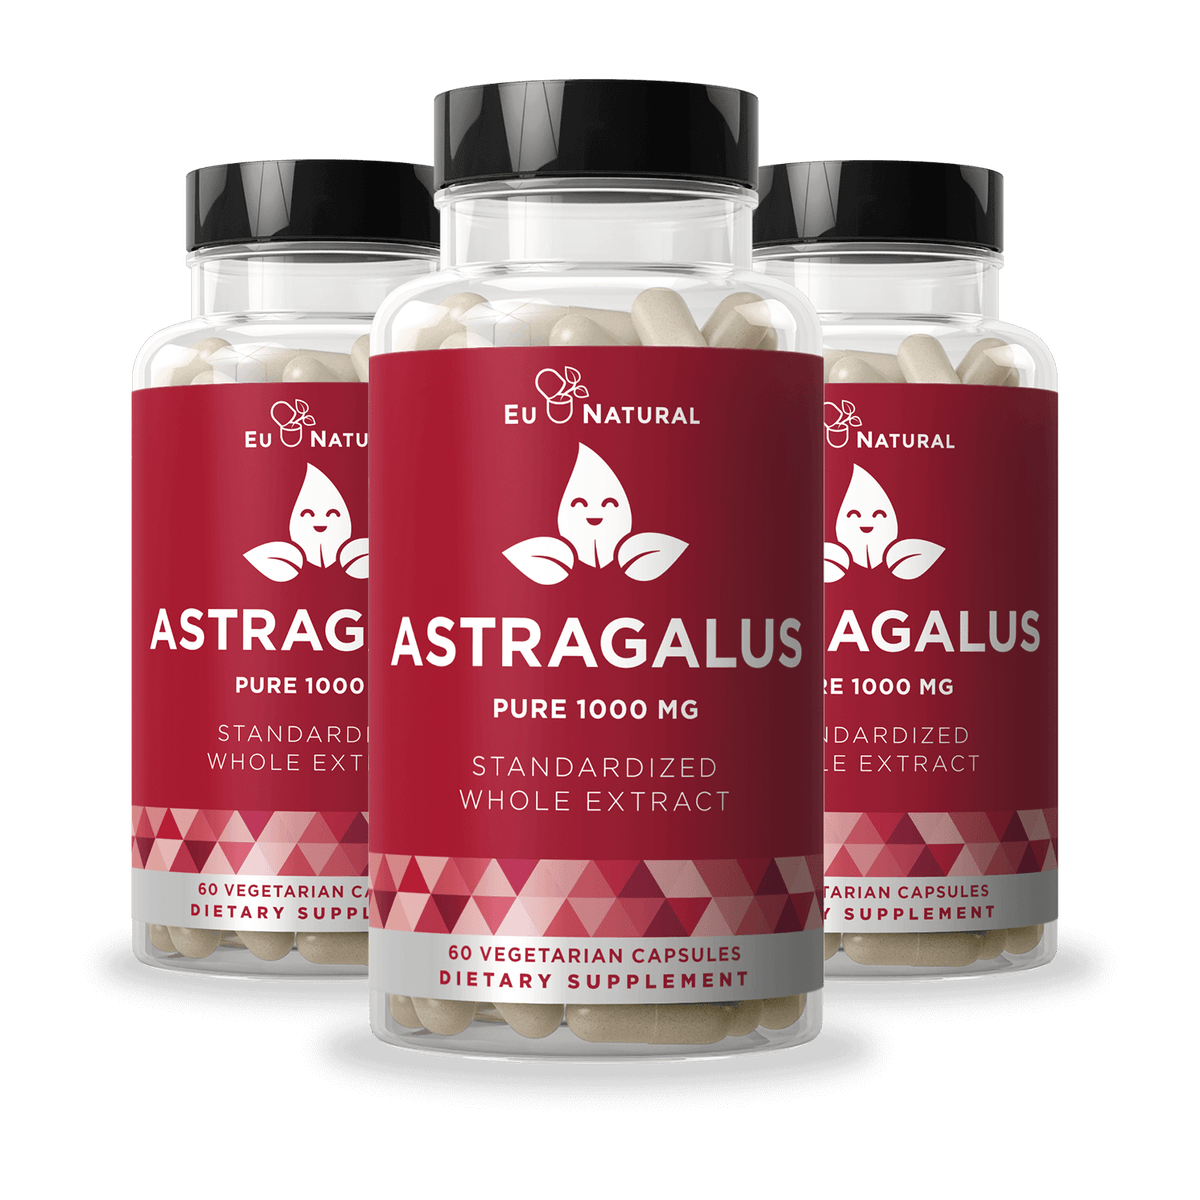 Eu Natural ARMOR 3 ASTRAGALUS PURE 1000 MG Immunity (3 Pack)